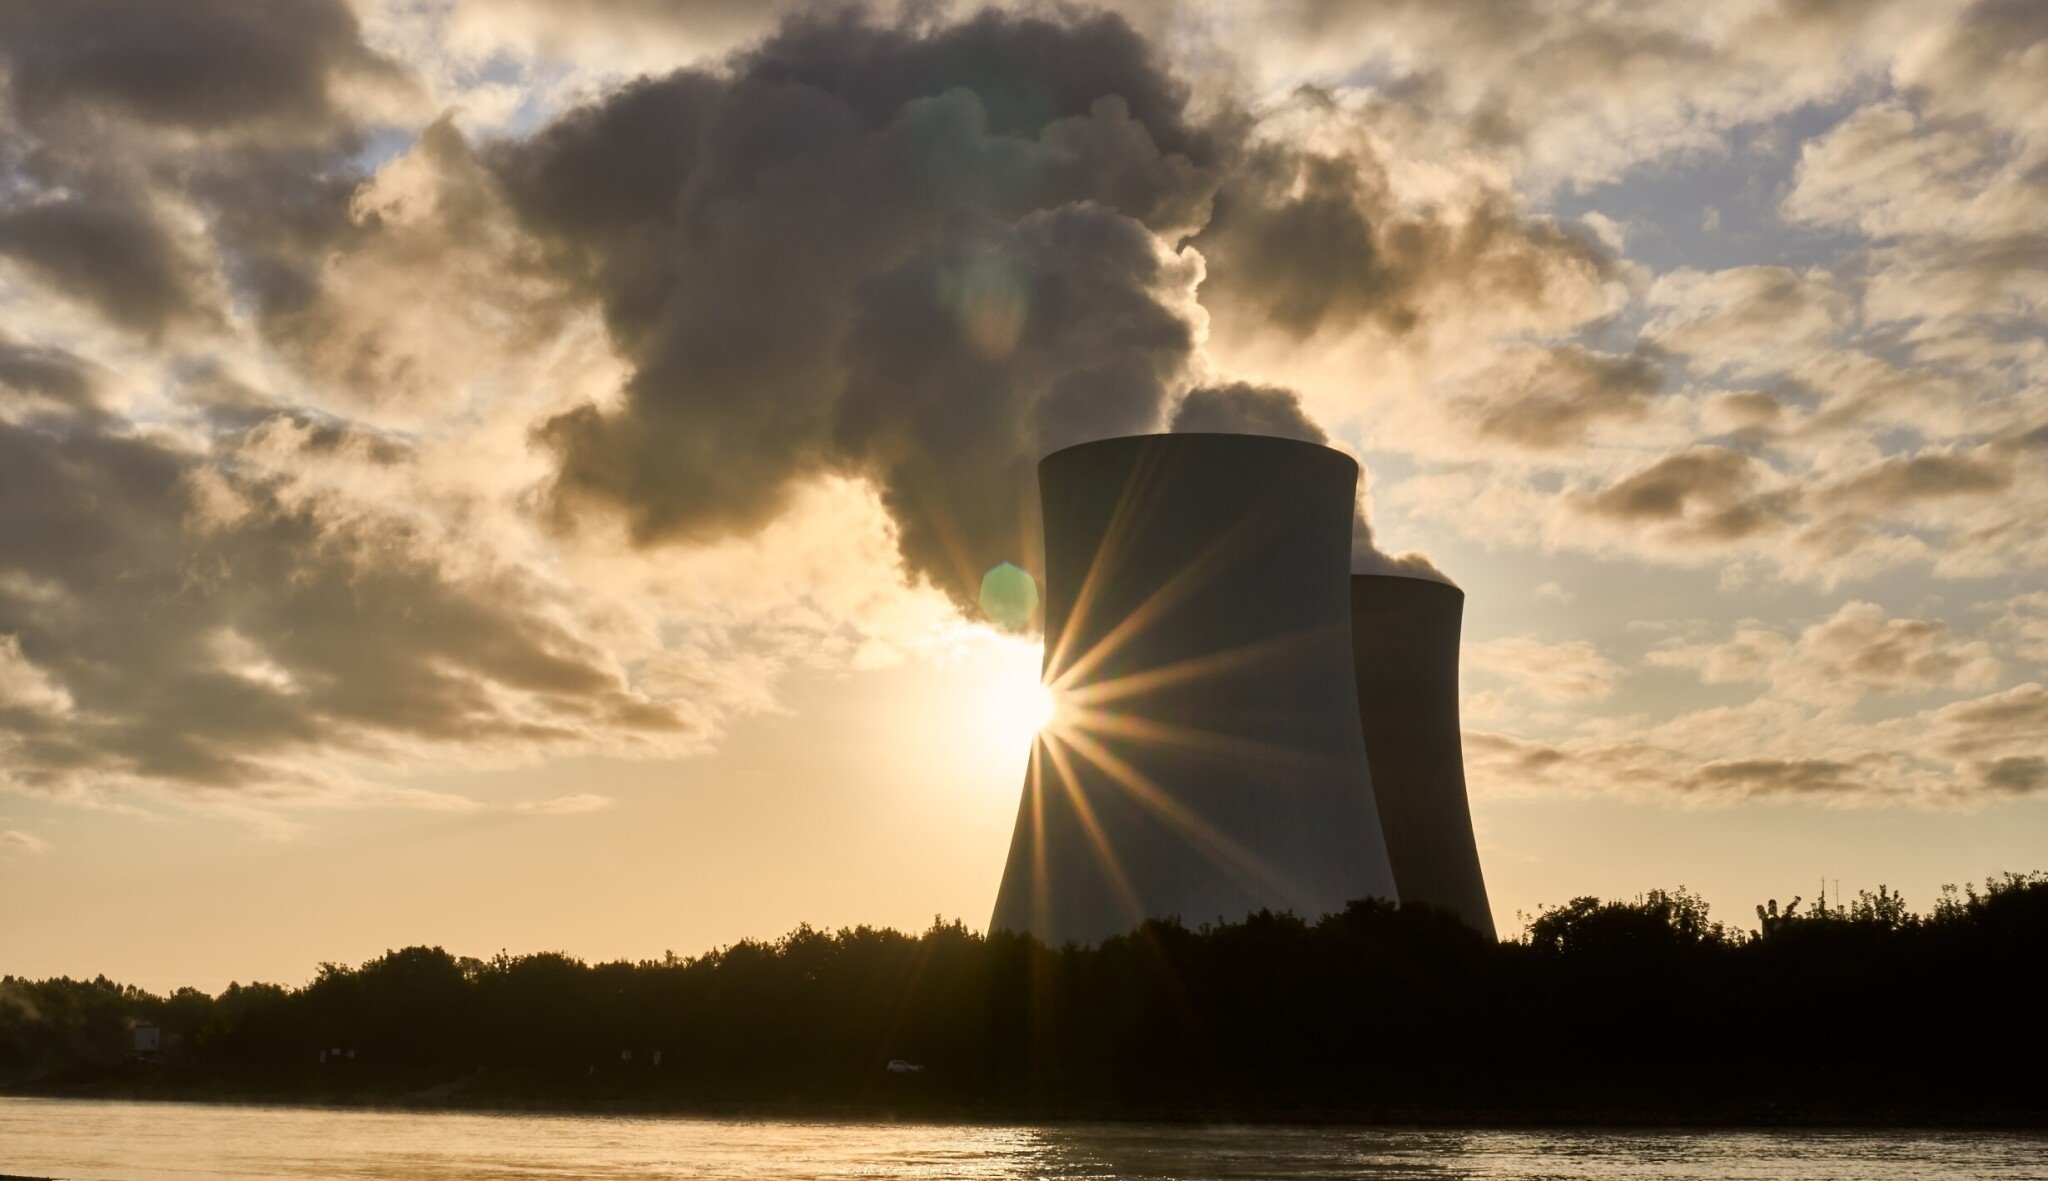 Nový jaderný reaktor v KLDR? Mezinárodní agentura zpozorovala aktivitu